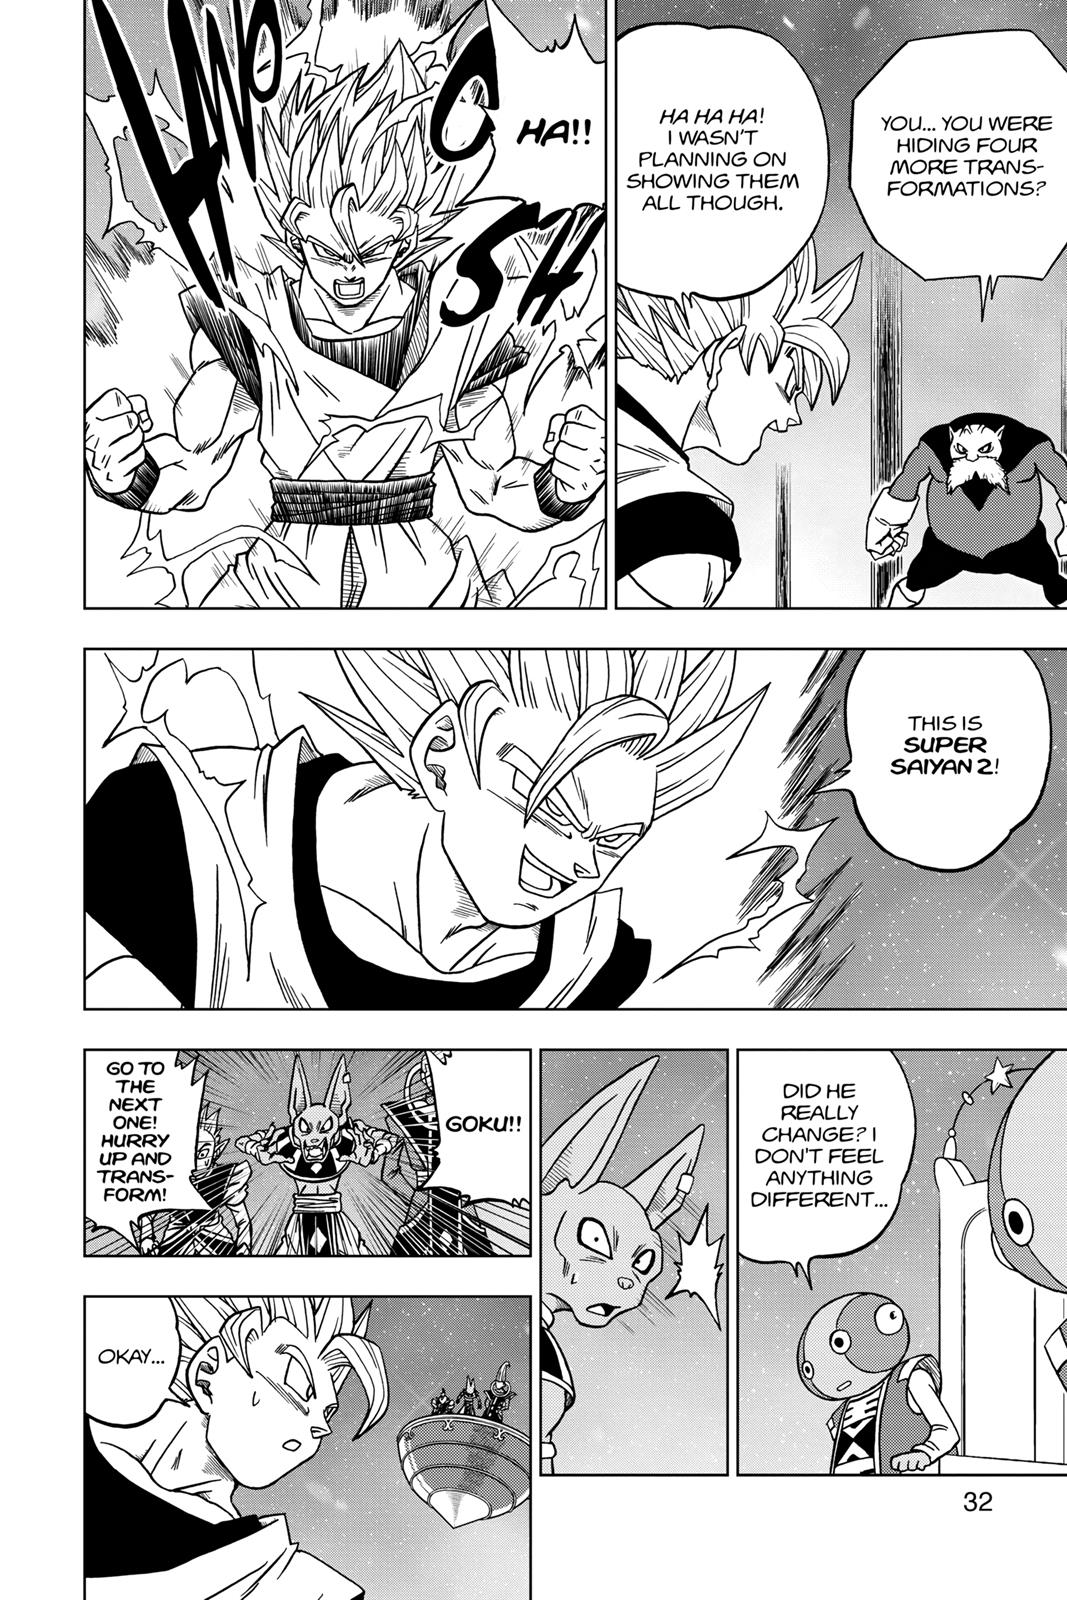  Dragon Ball Super, Chapter 29 image 32